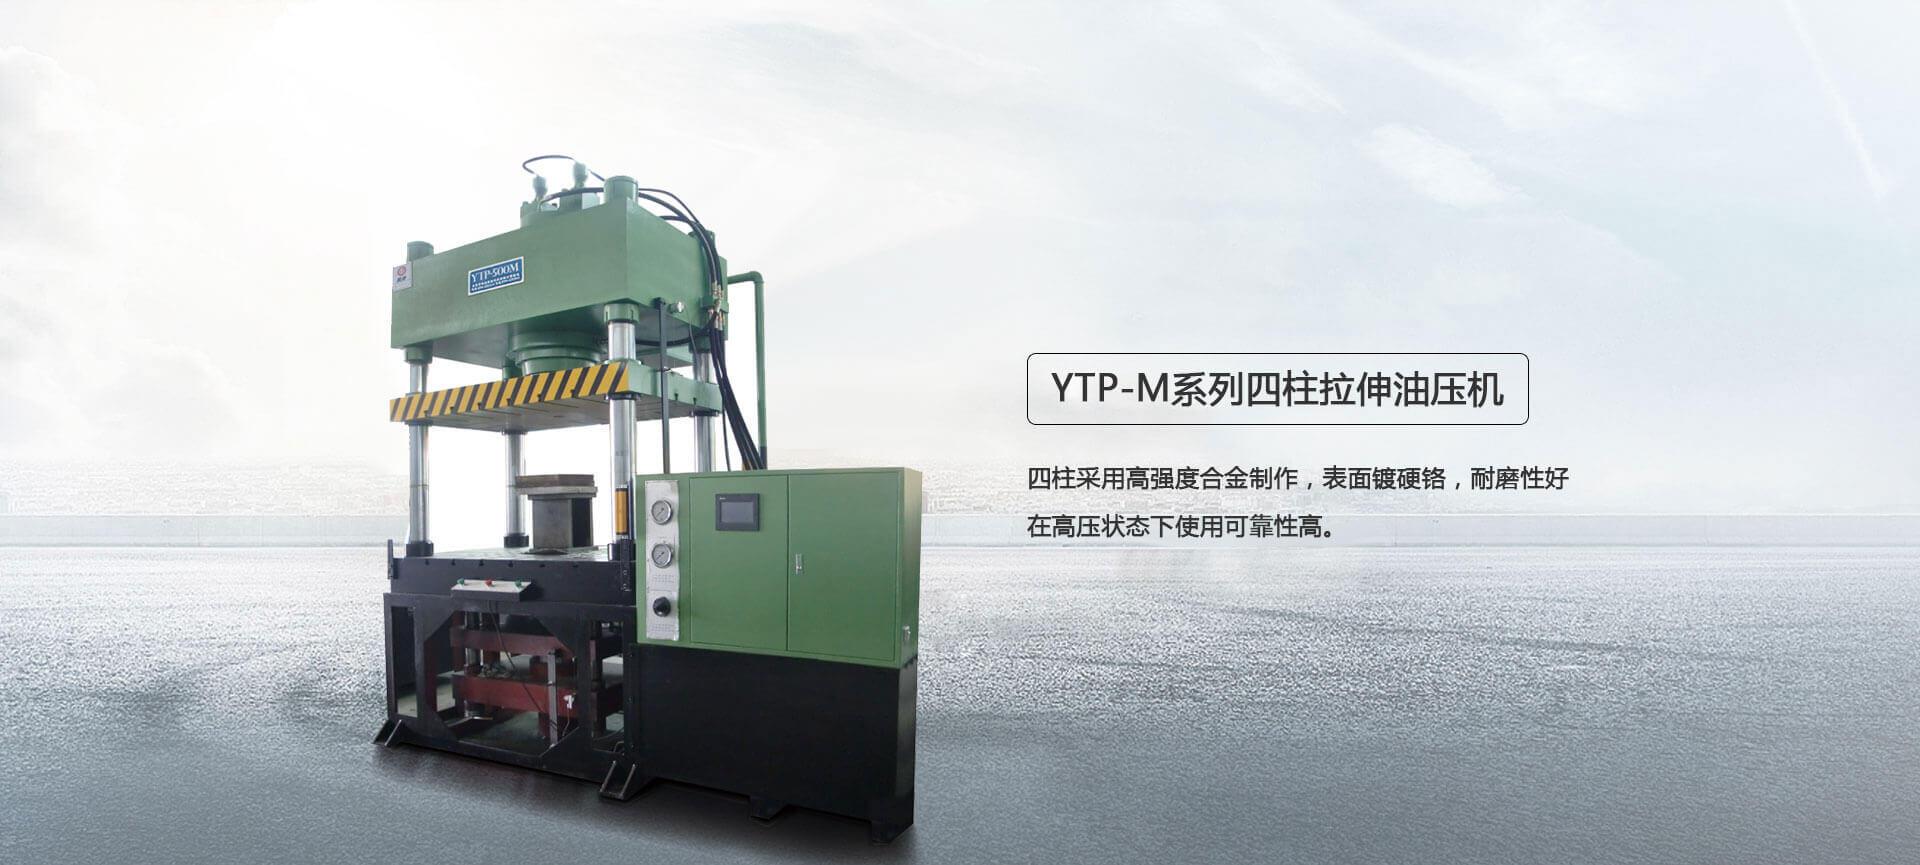 YTP-M系列四柱拉伸油压机